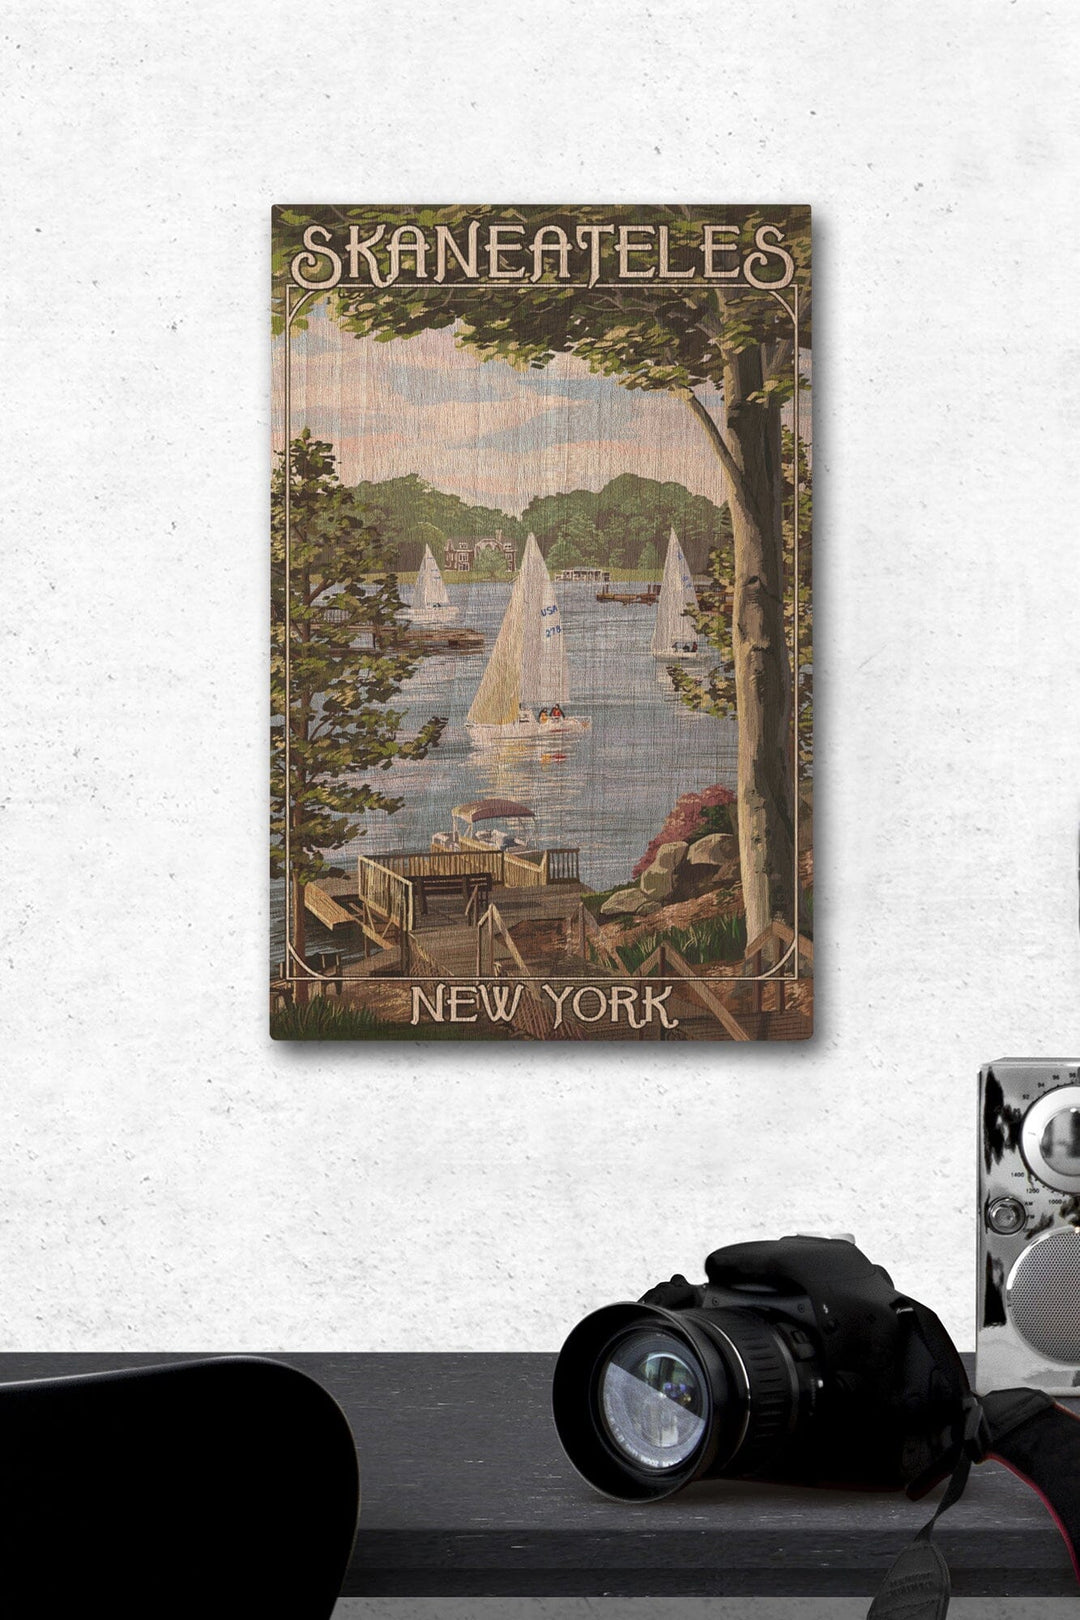 Skaneateles, New York, Lake View with Sailboats, Lantern Press Artwork, Wood Signs and Postcards Wood Lantern Press 12 x 18 Wood Gallery Print 